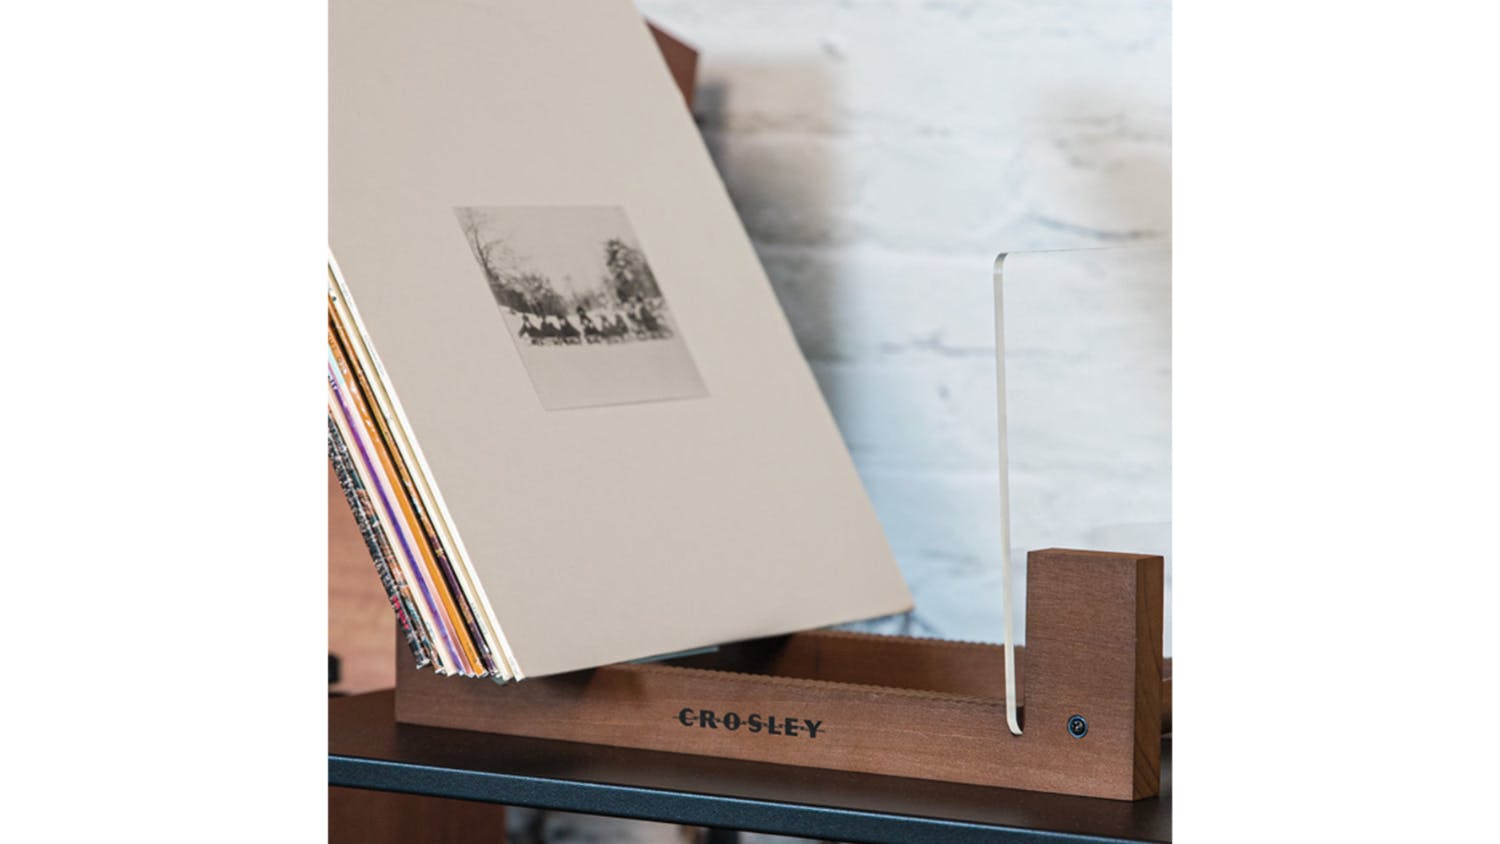 Crosley Record Storage Display Stand w/ Taylor Swift - 1989 Vinyl Album